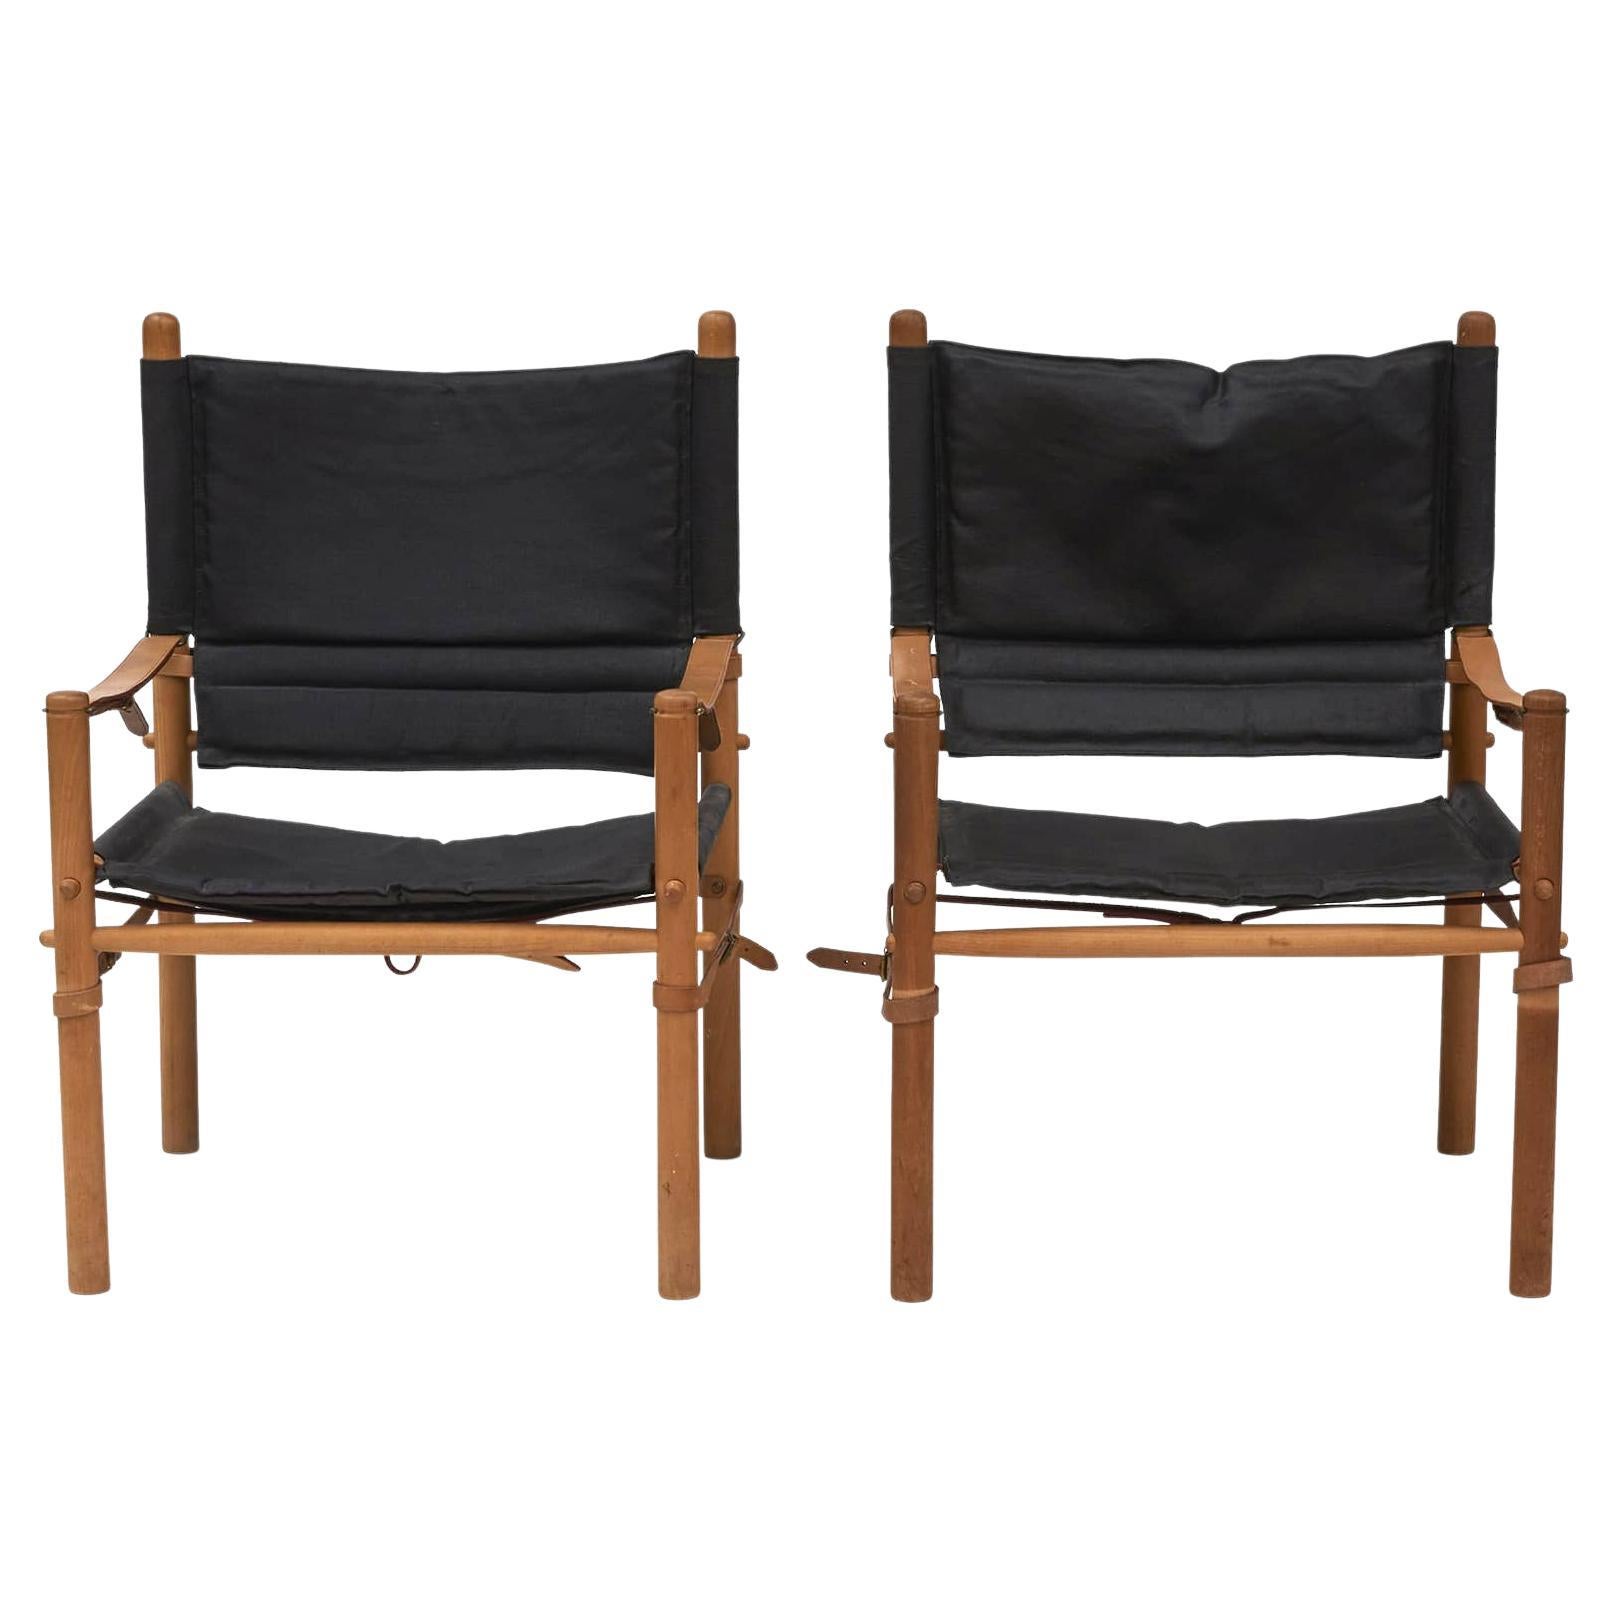 Pair of Axel Thygesen Oasis Safari Chairs for Interna, Denmark, 1960's